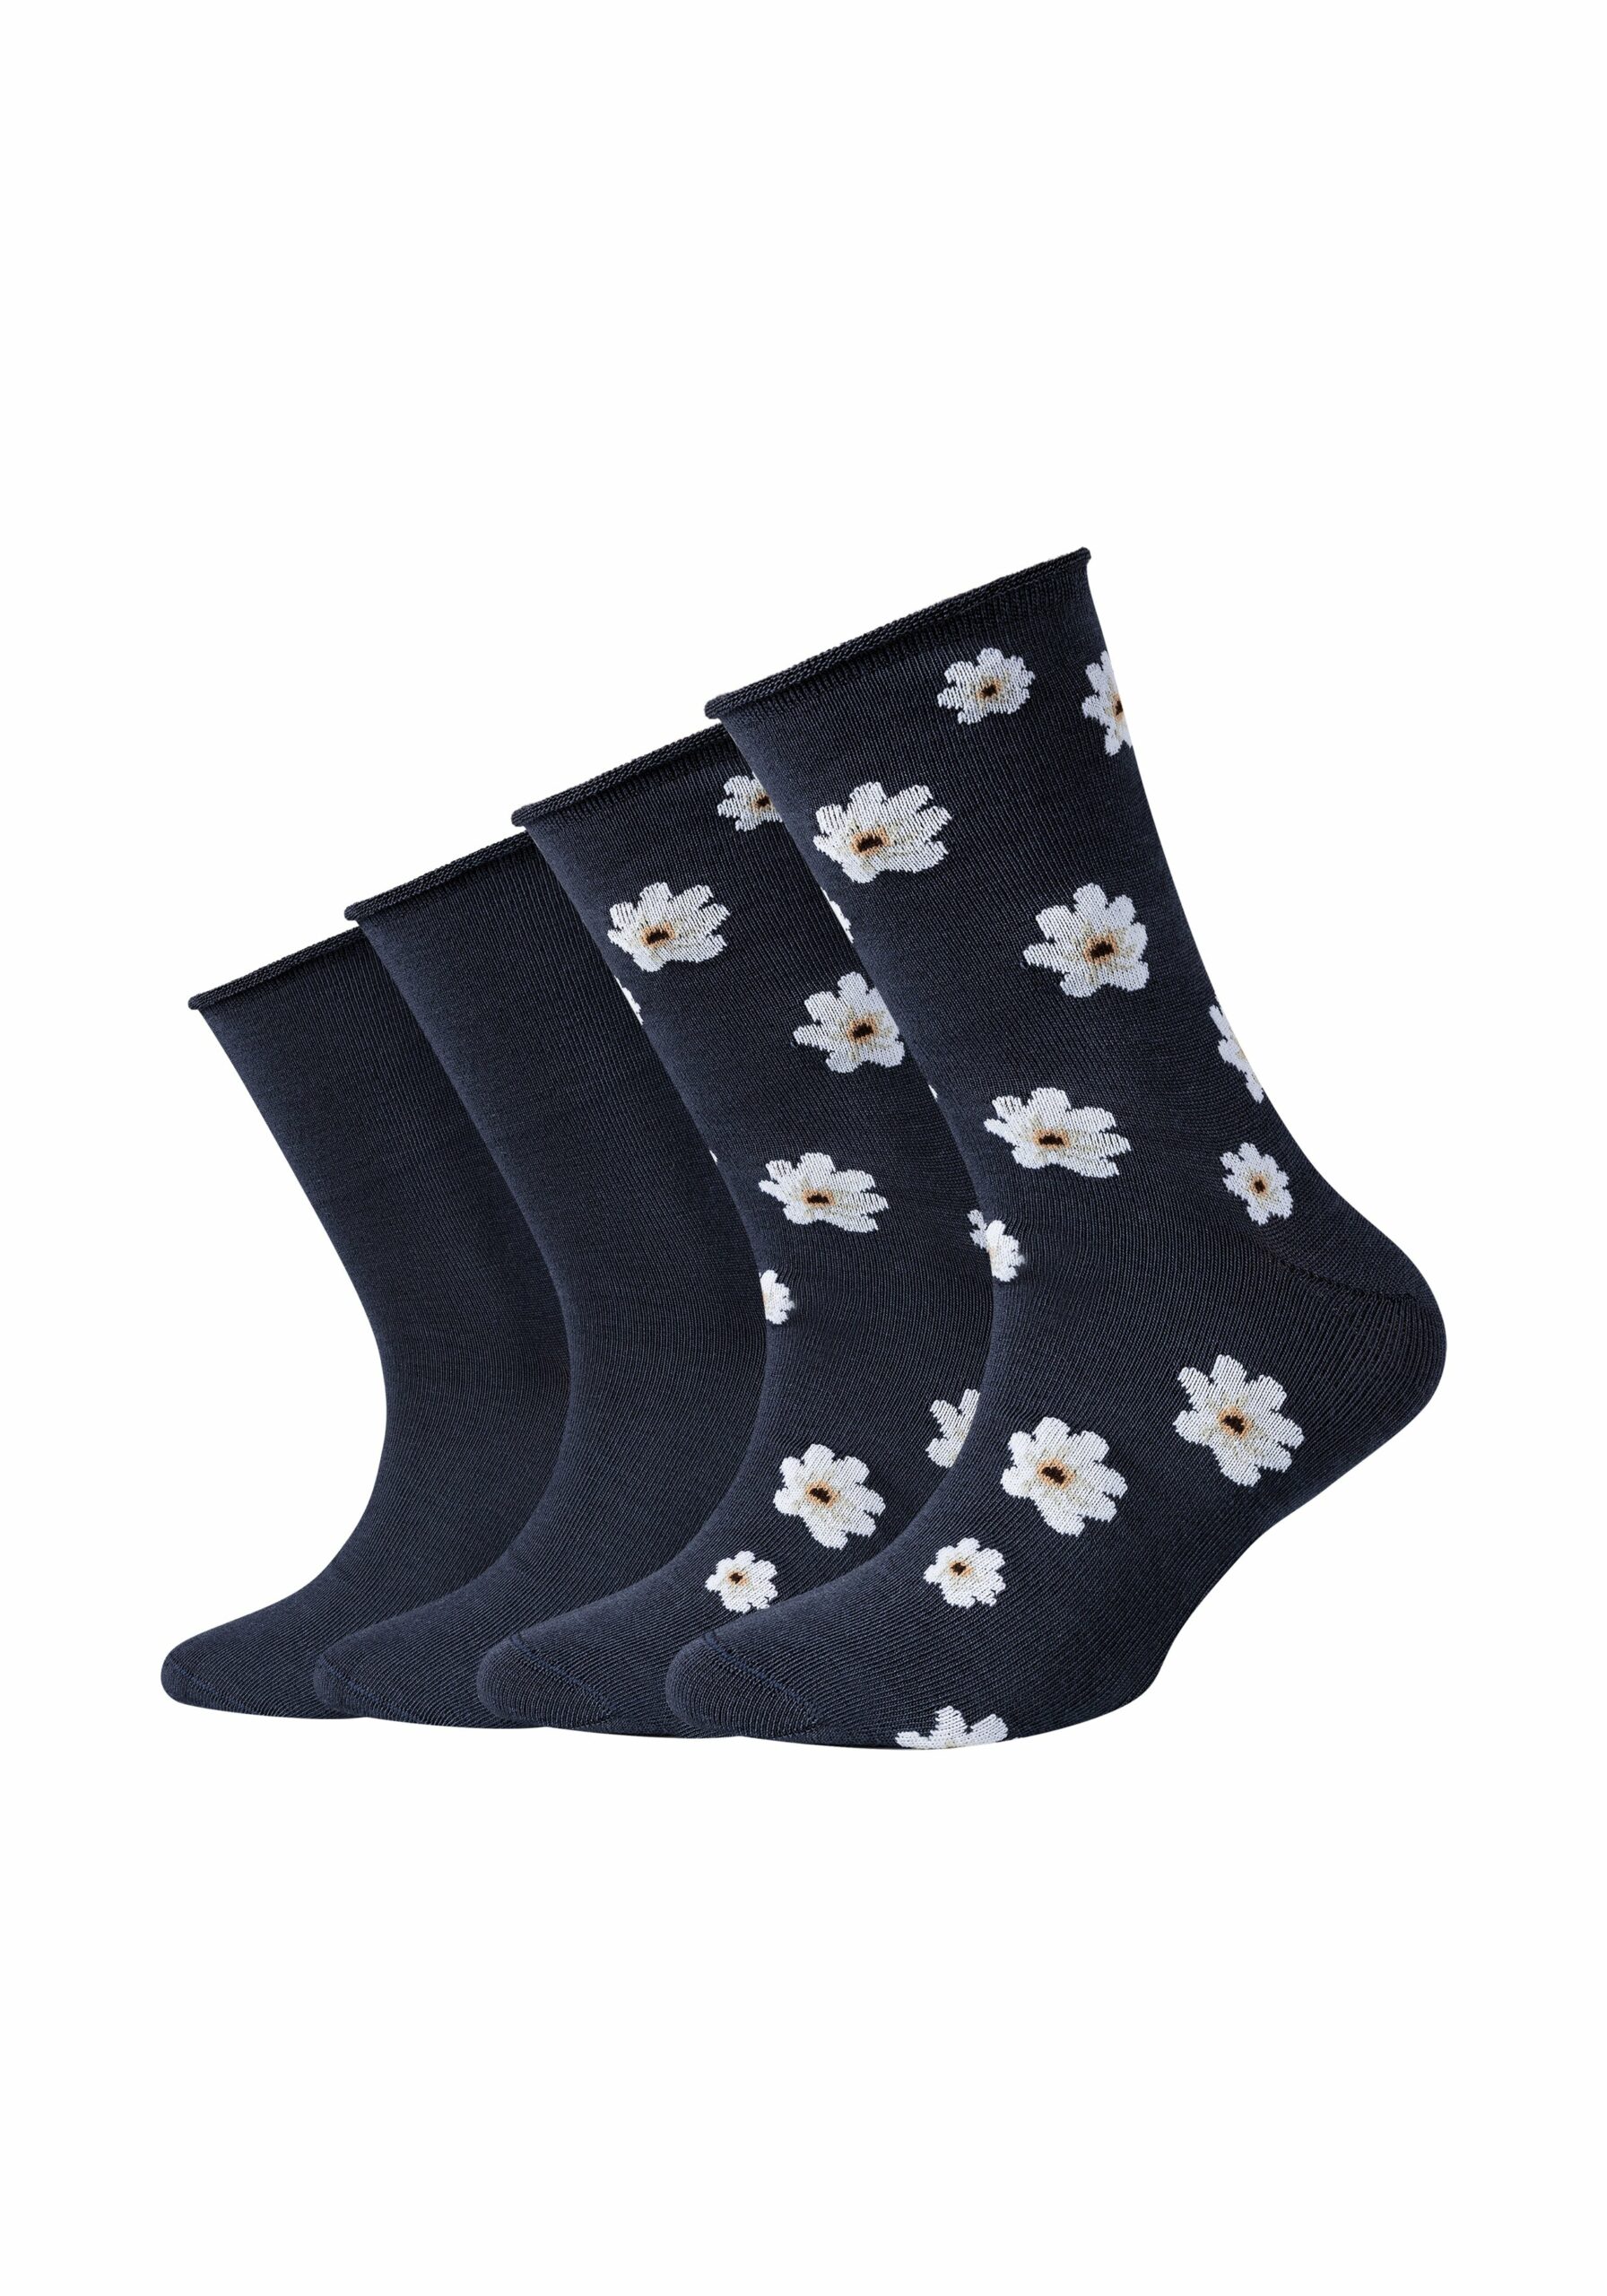 s.Oliver Kinder Socken Silky Touch kaufen 4er blue Pack Flower bei